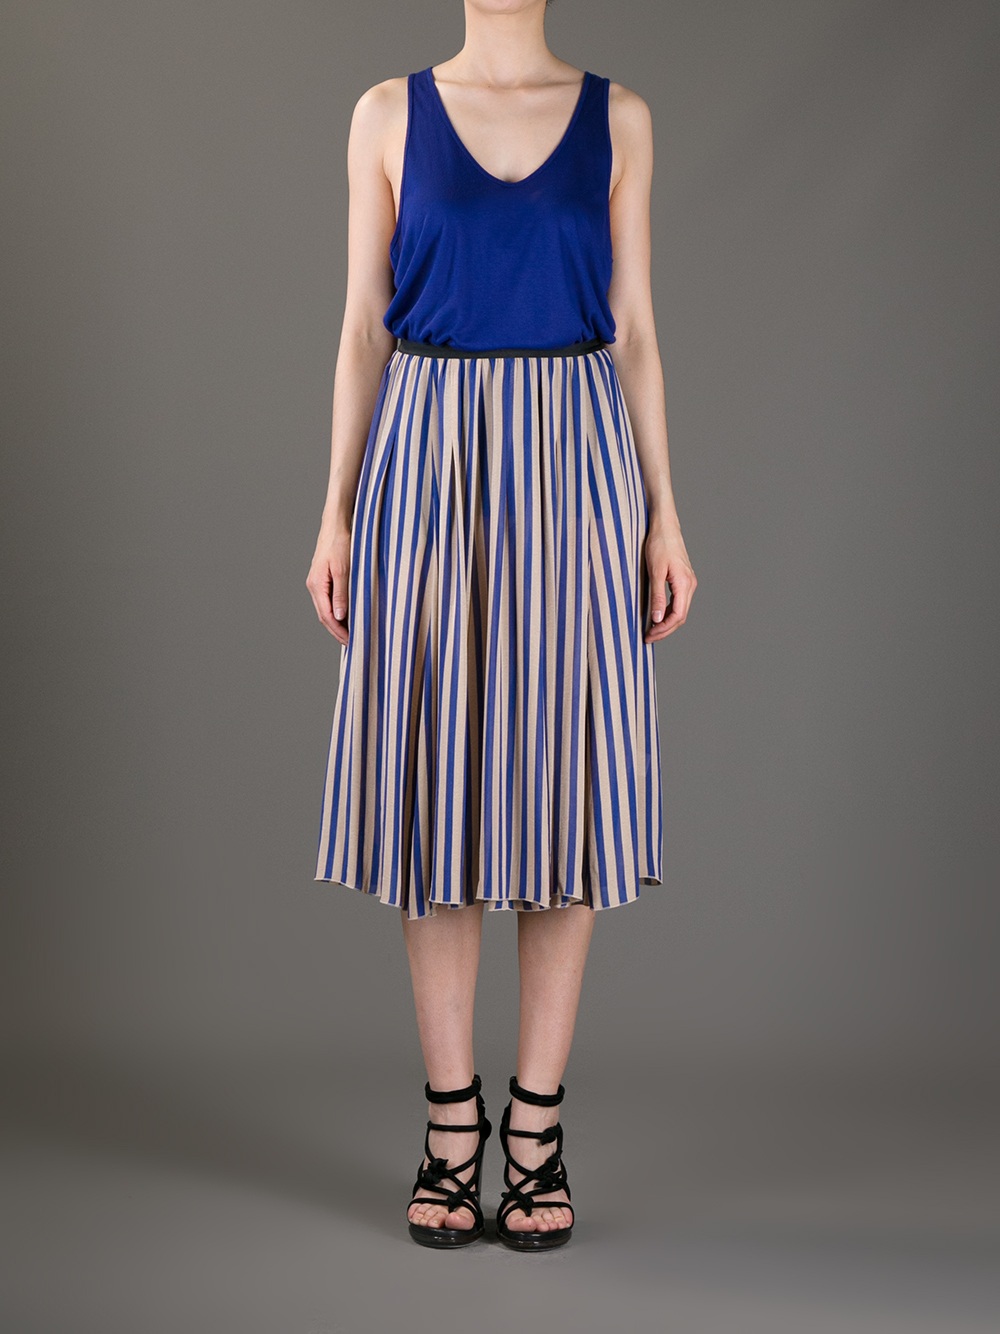 Forte Forte Striped Skirt in Blue - Lyst